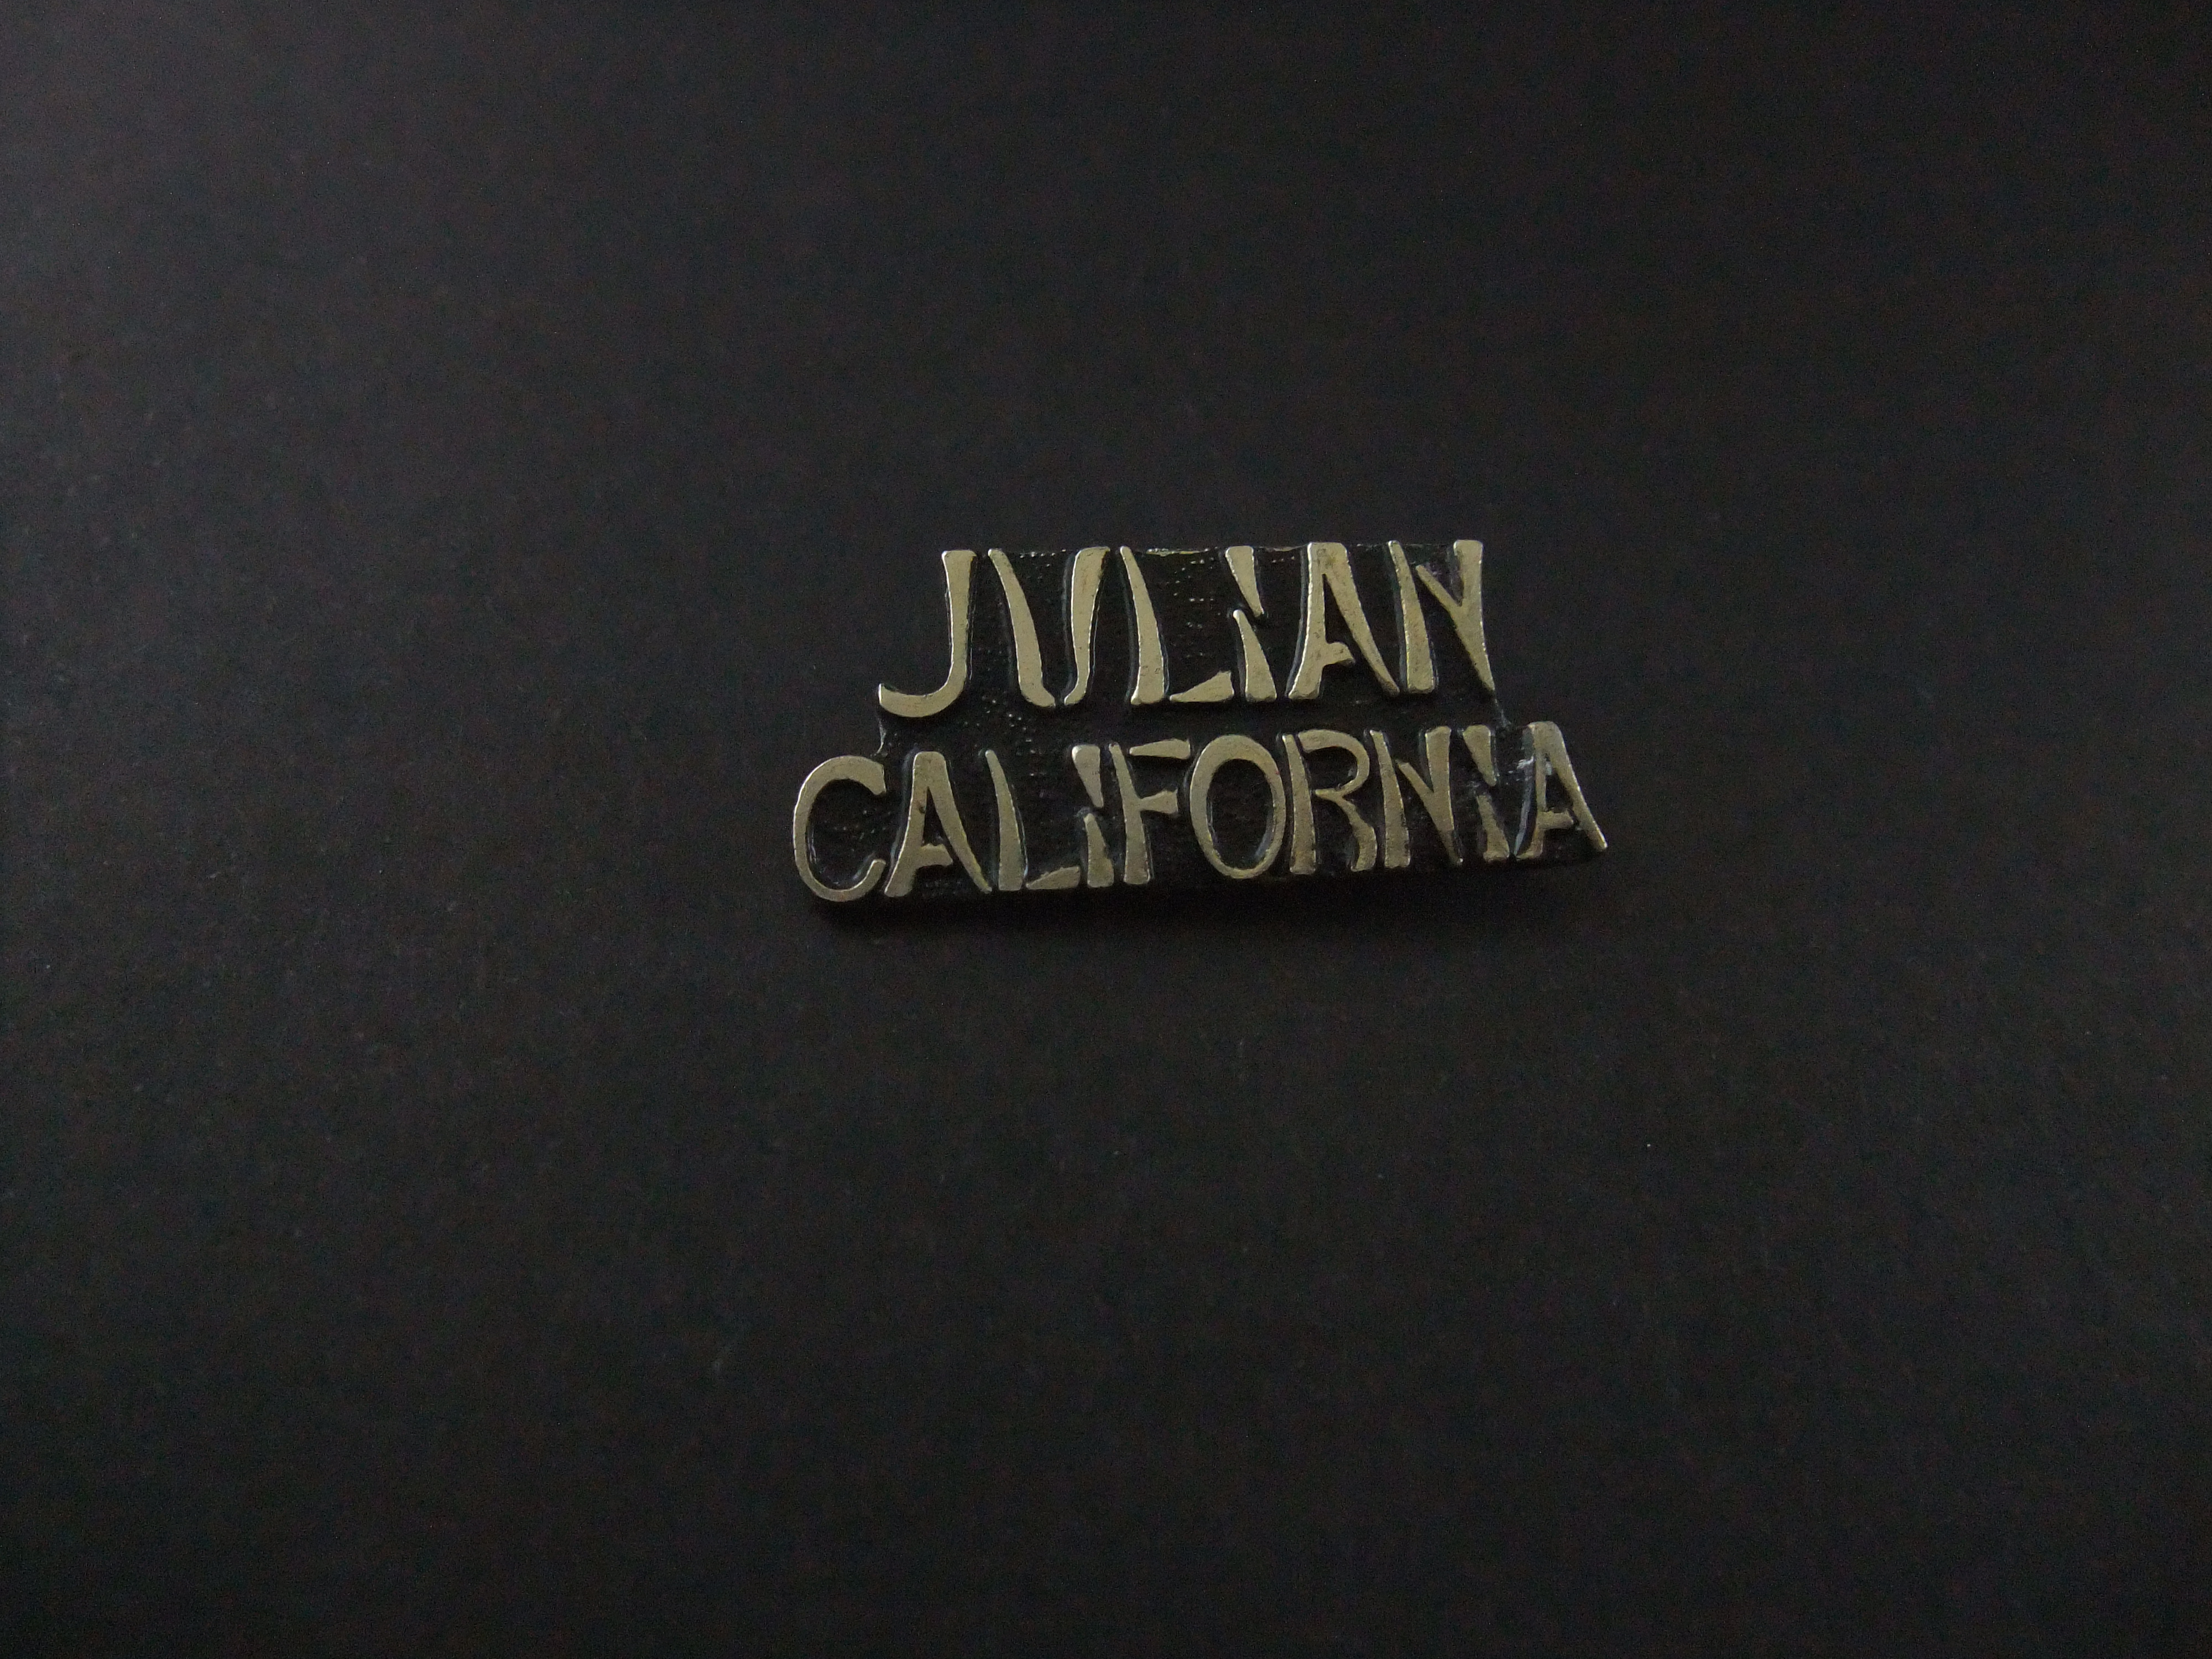 Julian California(plaats in de Amerikaanse staat California) logo